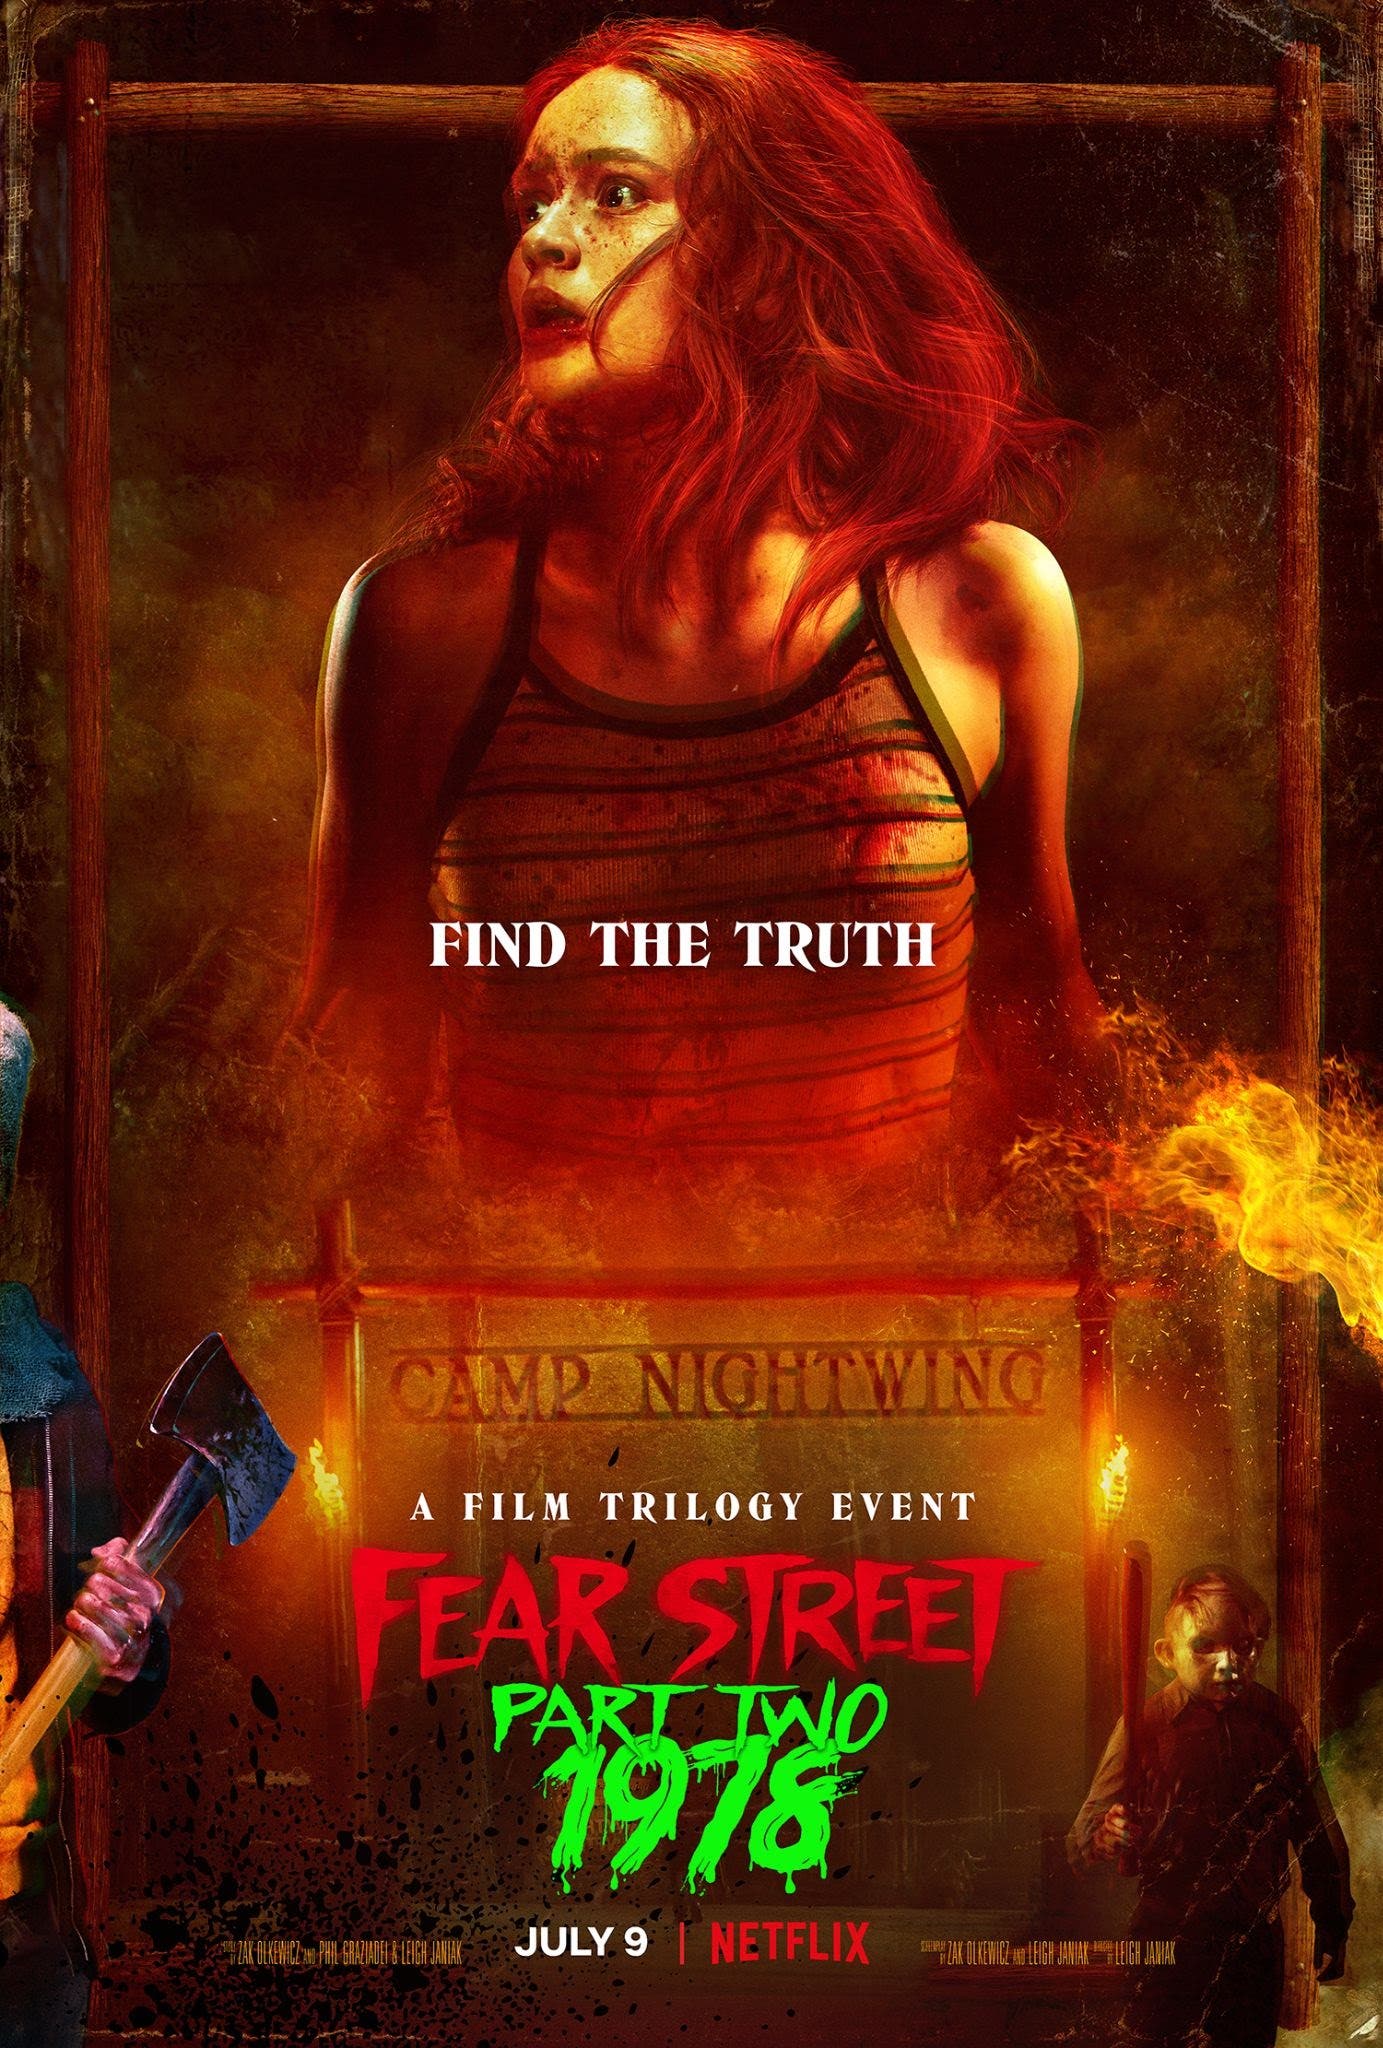 Netflix Drops Trailer and Key Art for ‘Fear Street Trilogy Part 2 1978